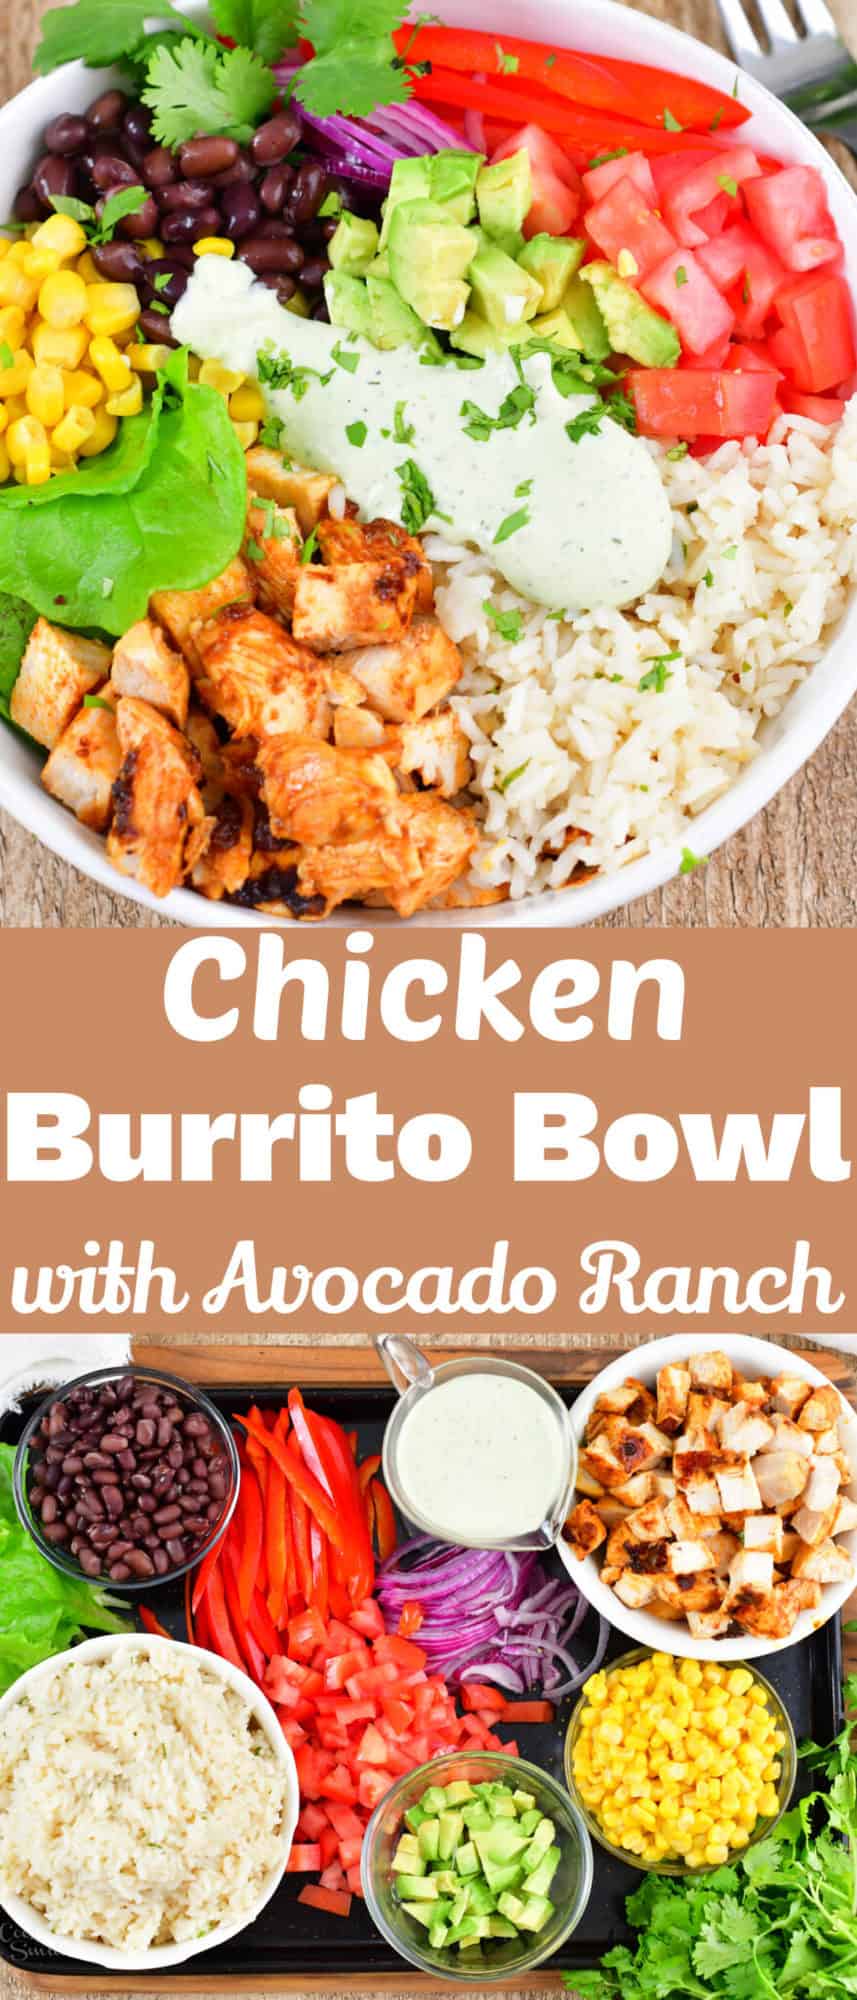 Burrito Bowl - Chicken Burrito Bowls with Avocado Ranch Dressing